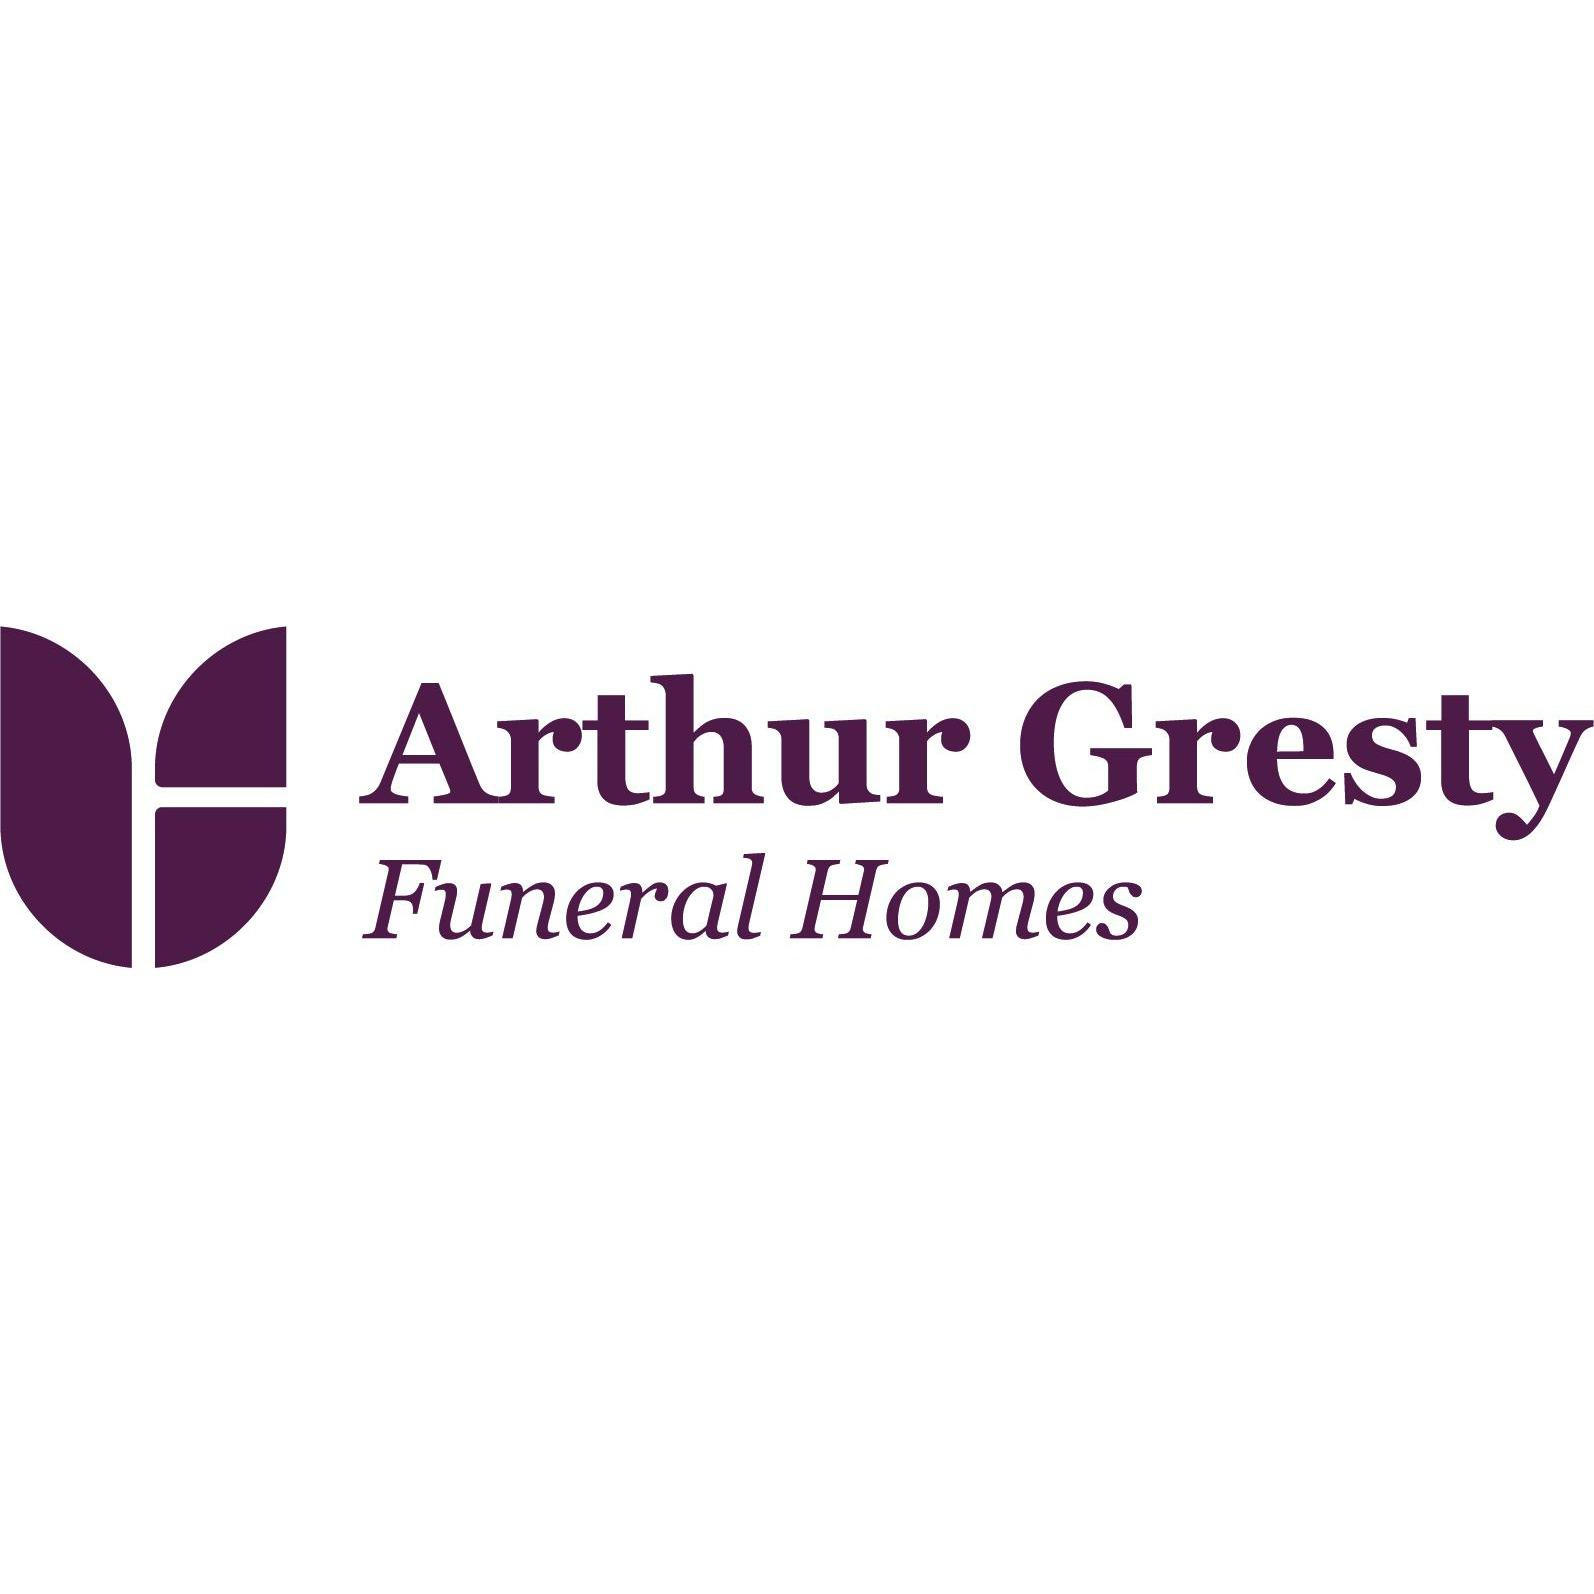 Arthur Gresty Funeral Homes and Memorial Masonry Specialist Logo